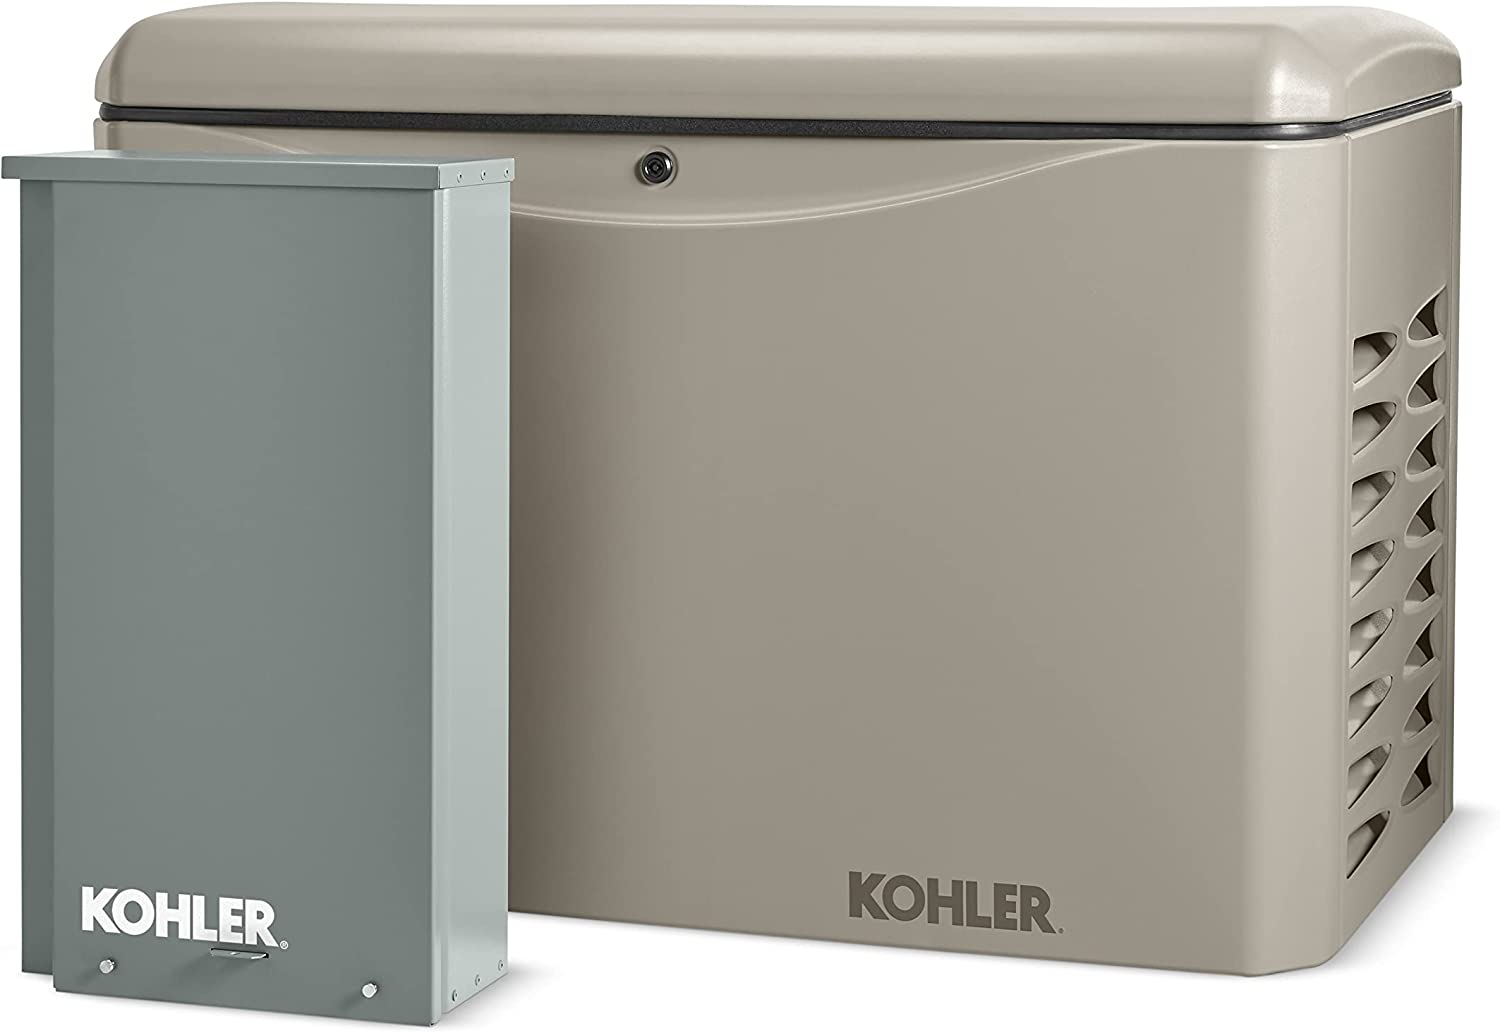 Kohler 20RCAL-200SELS 20kW Standby Generator, Tan